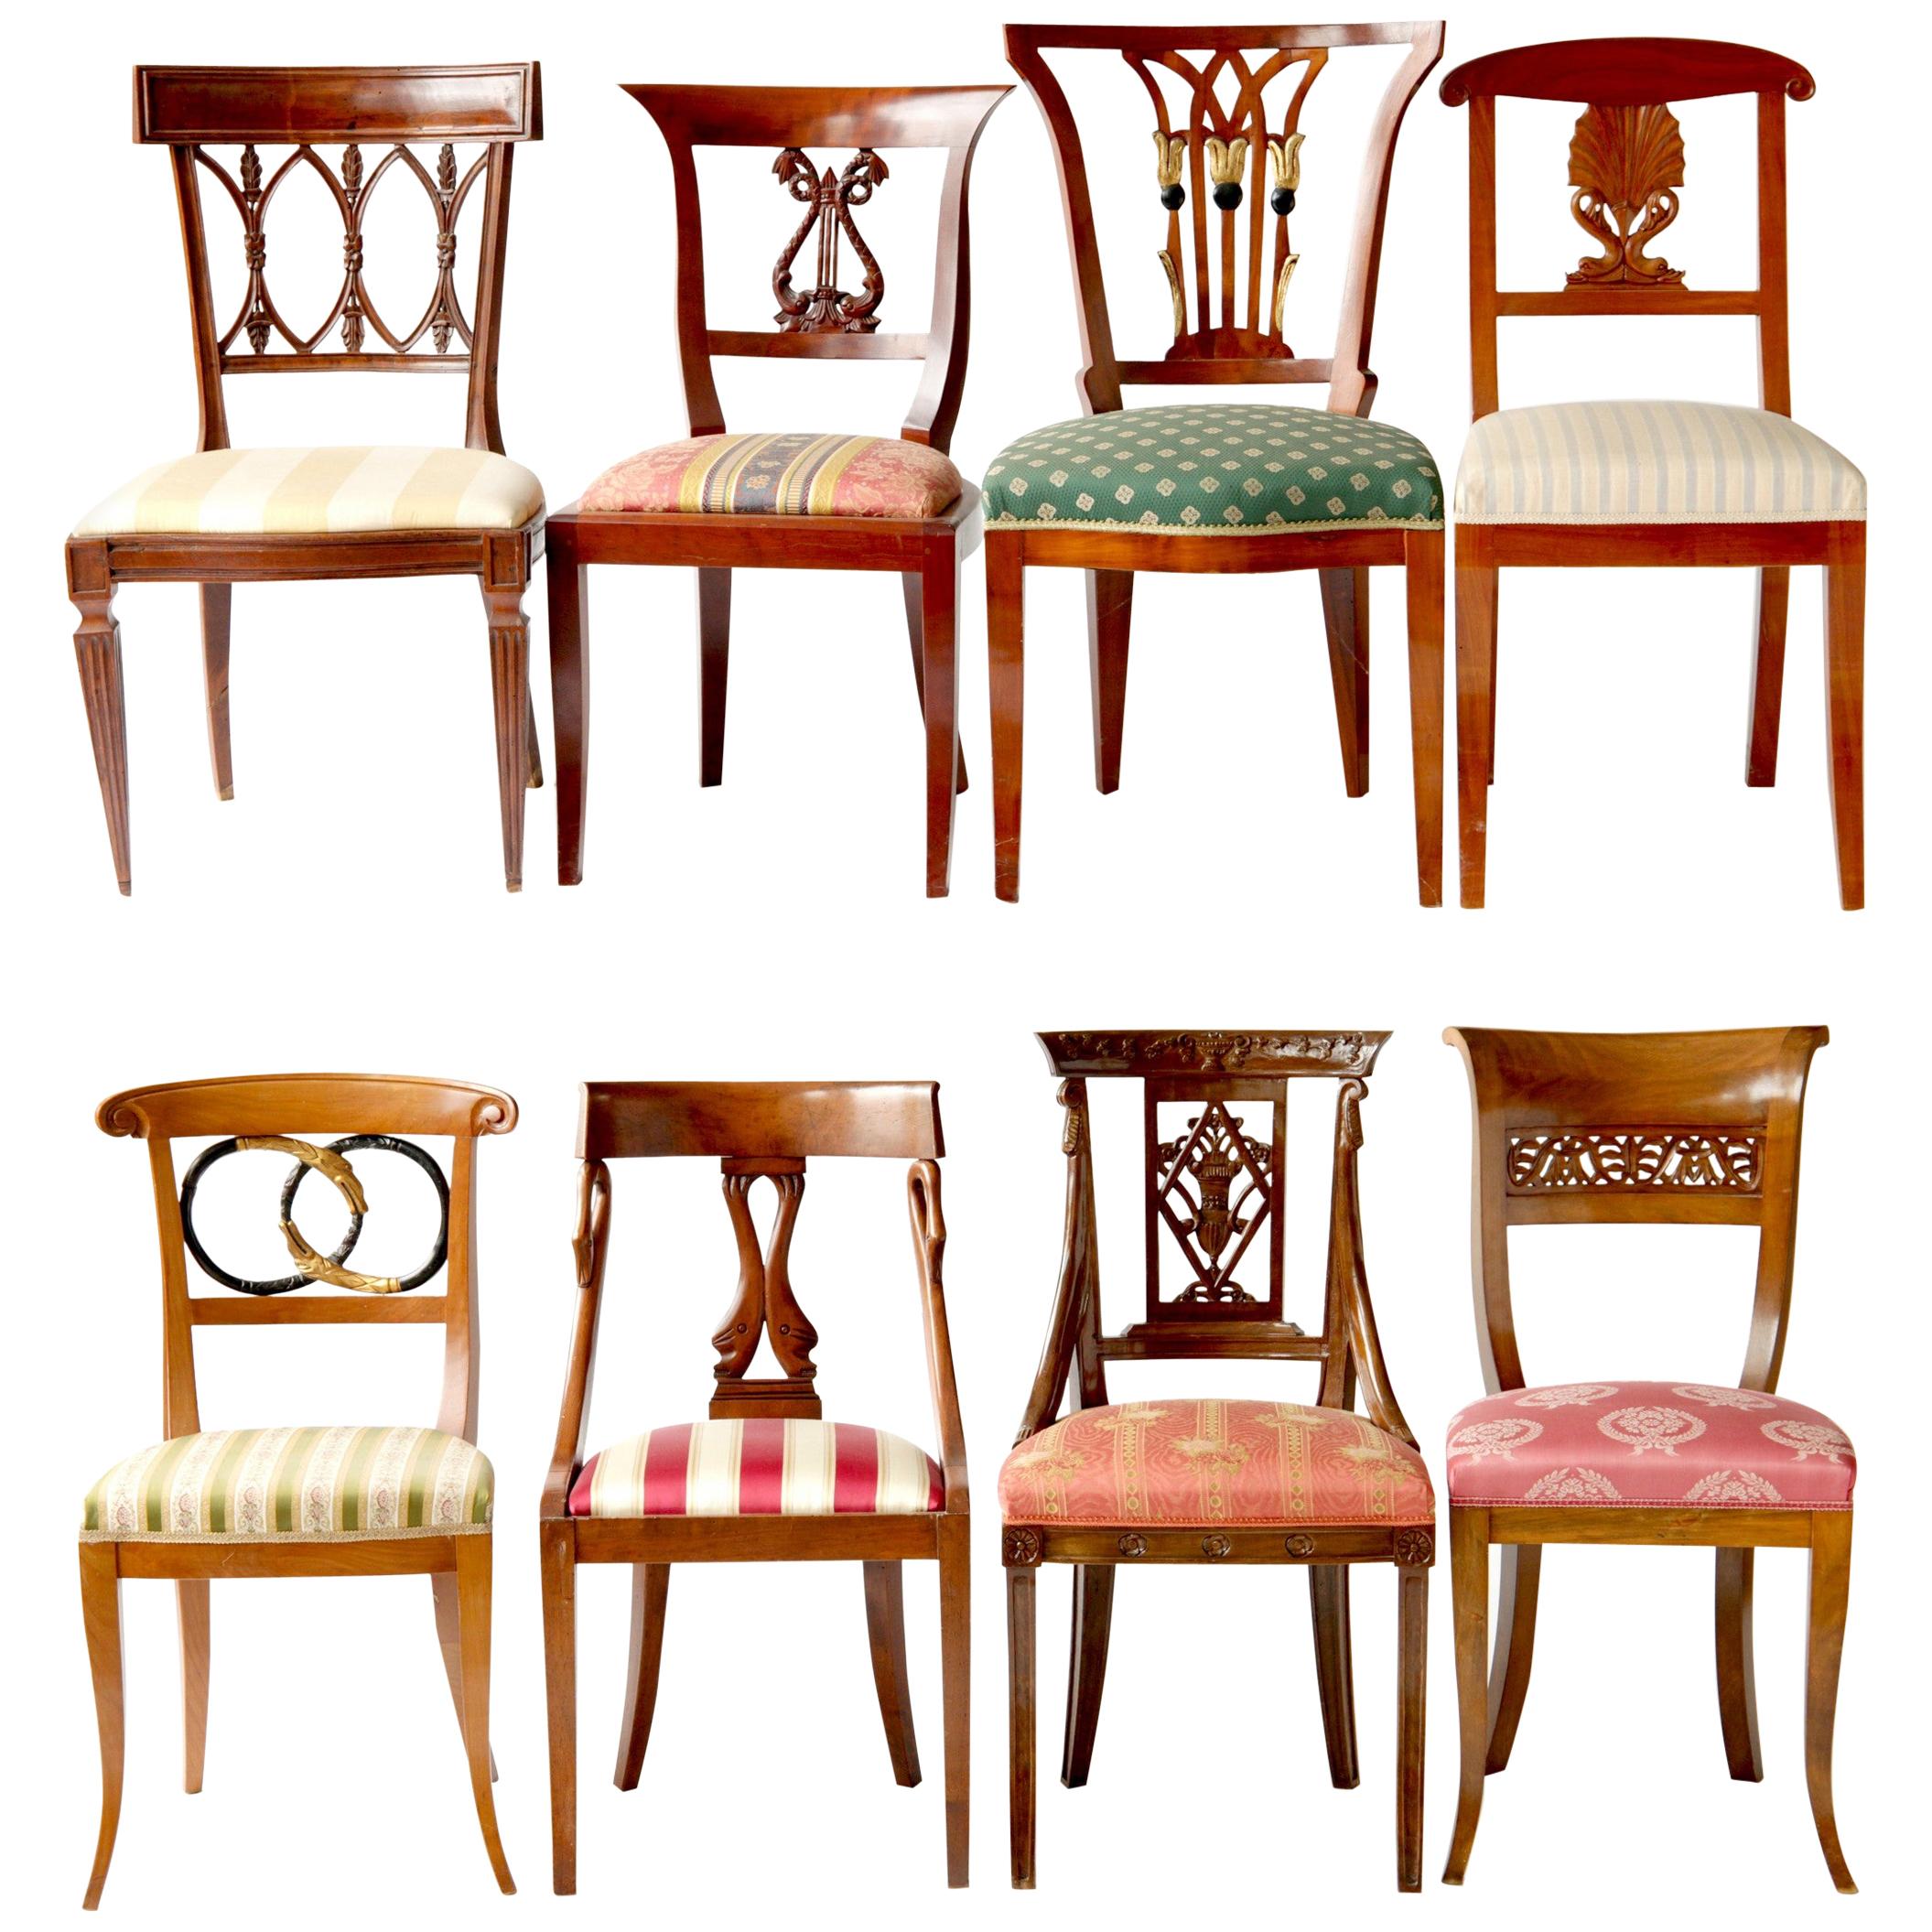 Empire Biedermeier Unique Eclectic Set, 8 Dining Chairs Each in Different Design